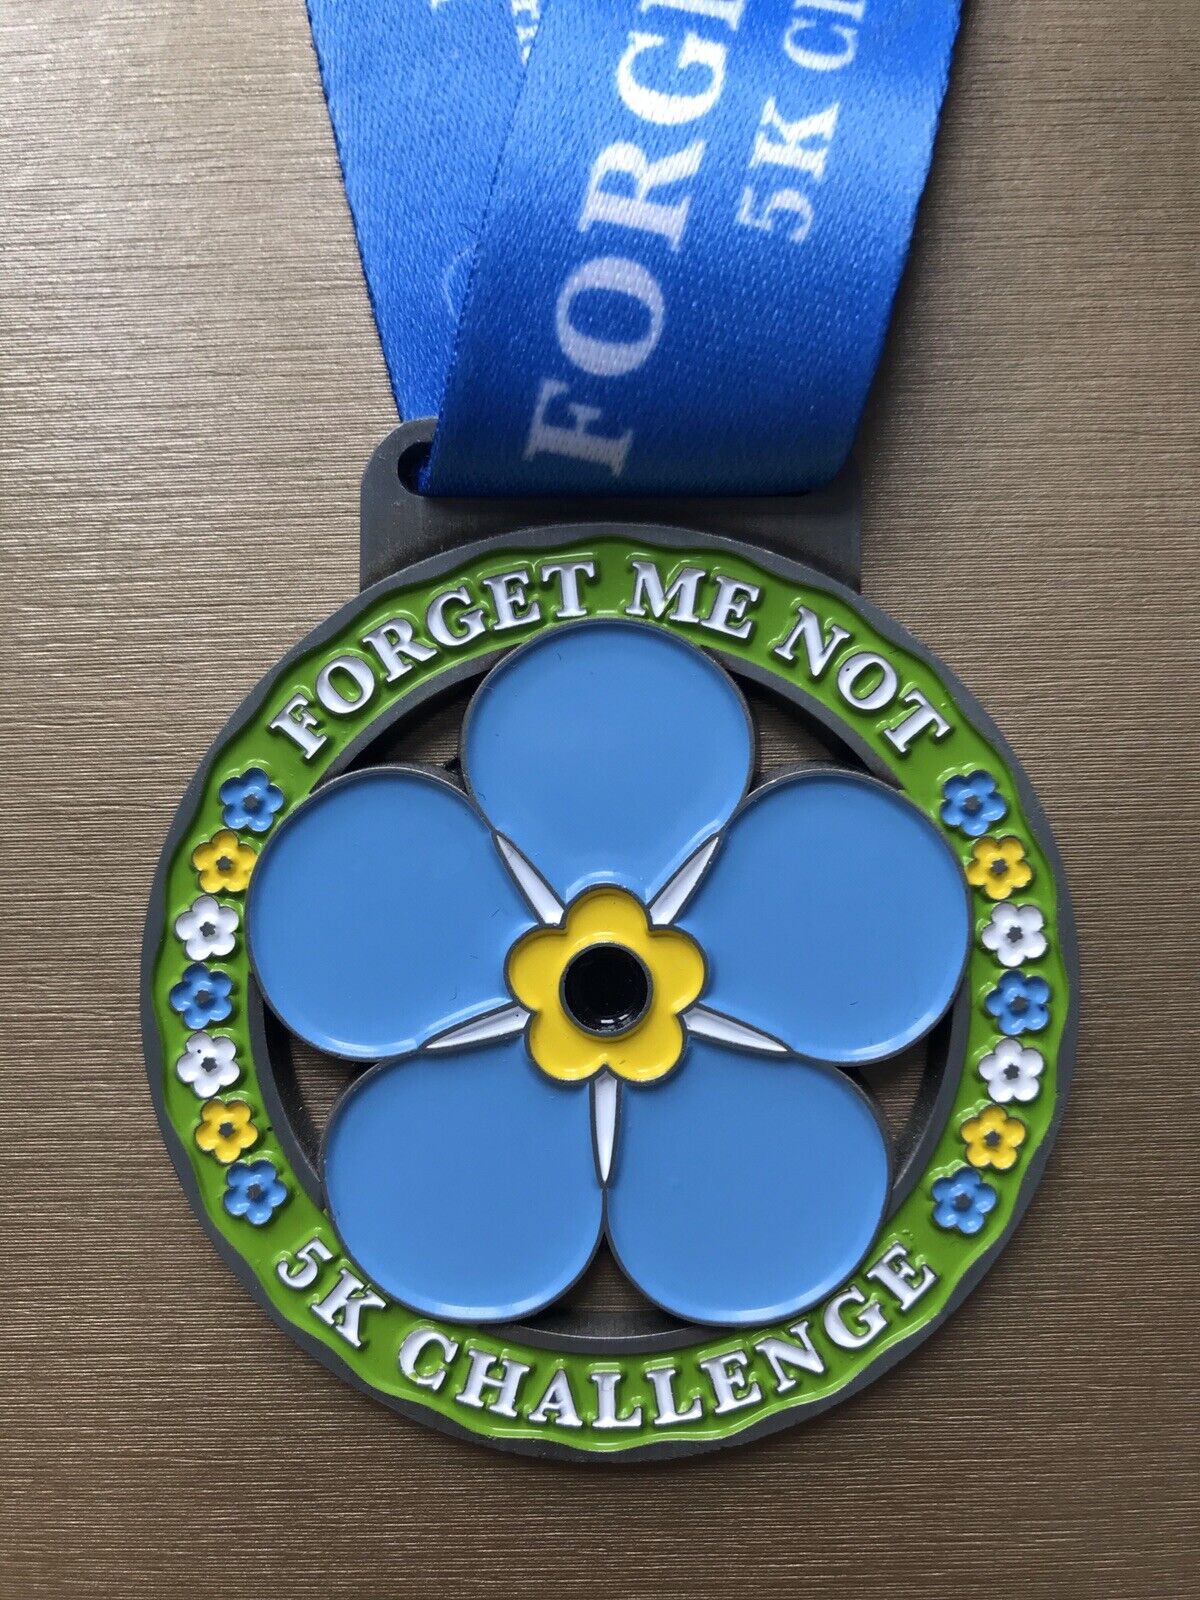 Forget Me Not 5k - Alzheimer’s Charity Bespoke Virtual Medal Run Walk Cycle